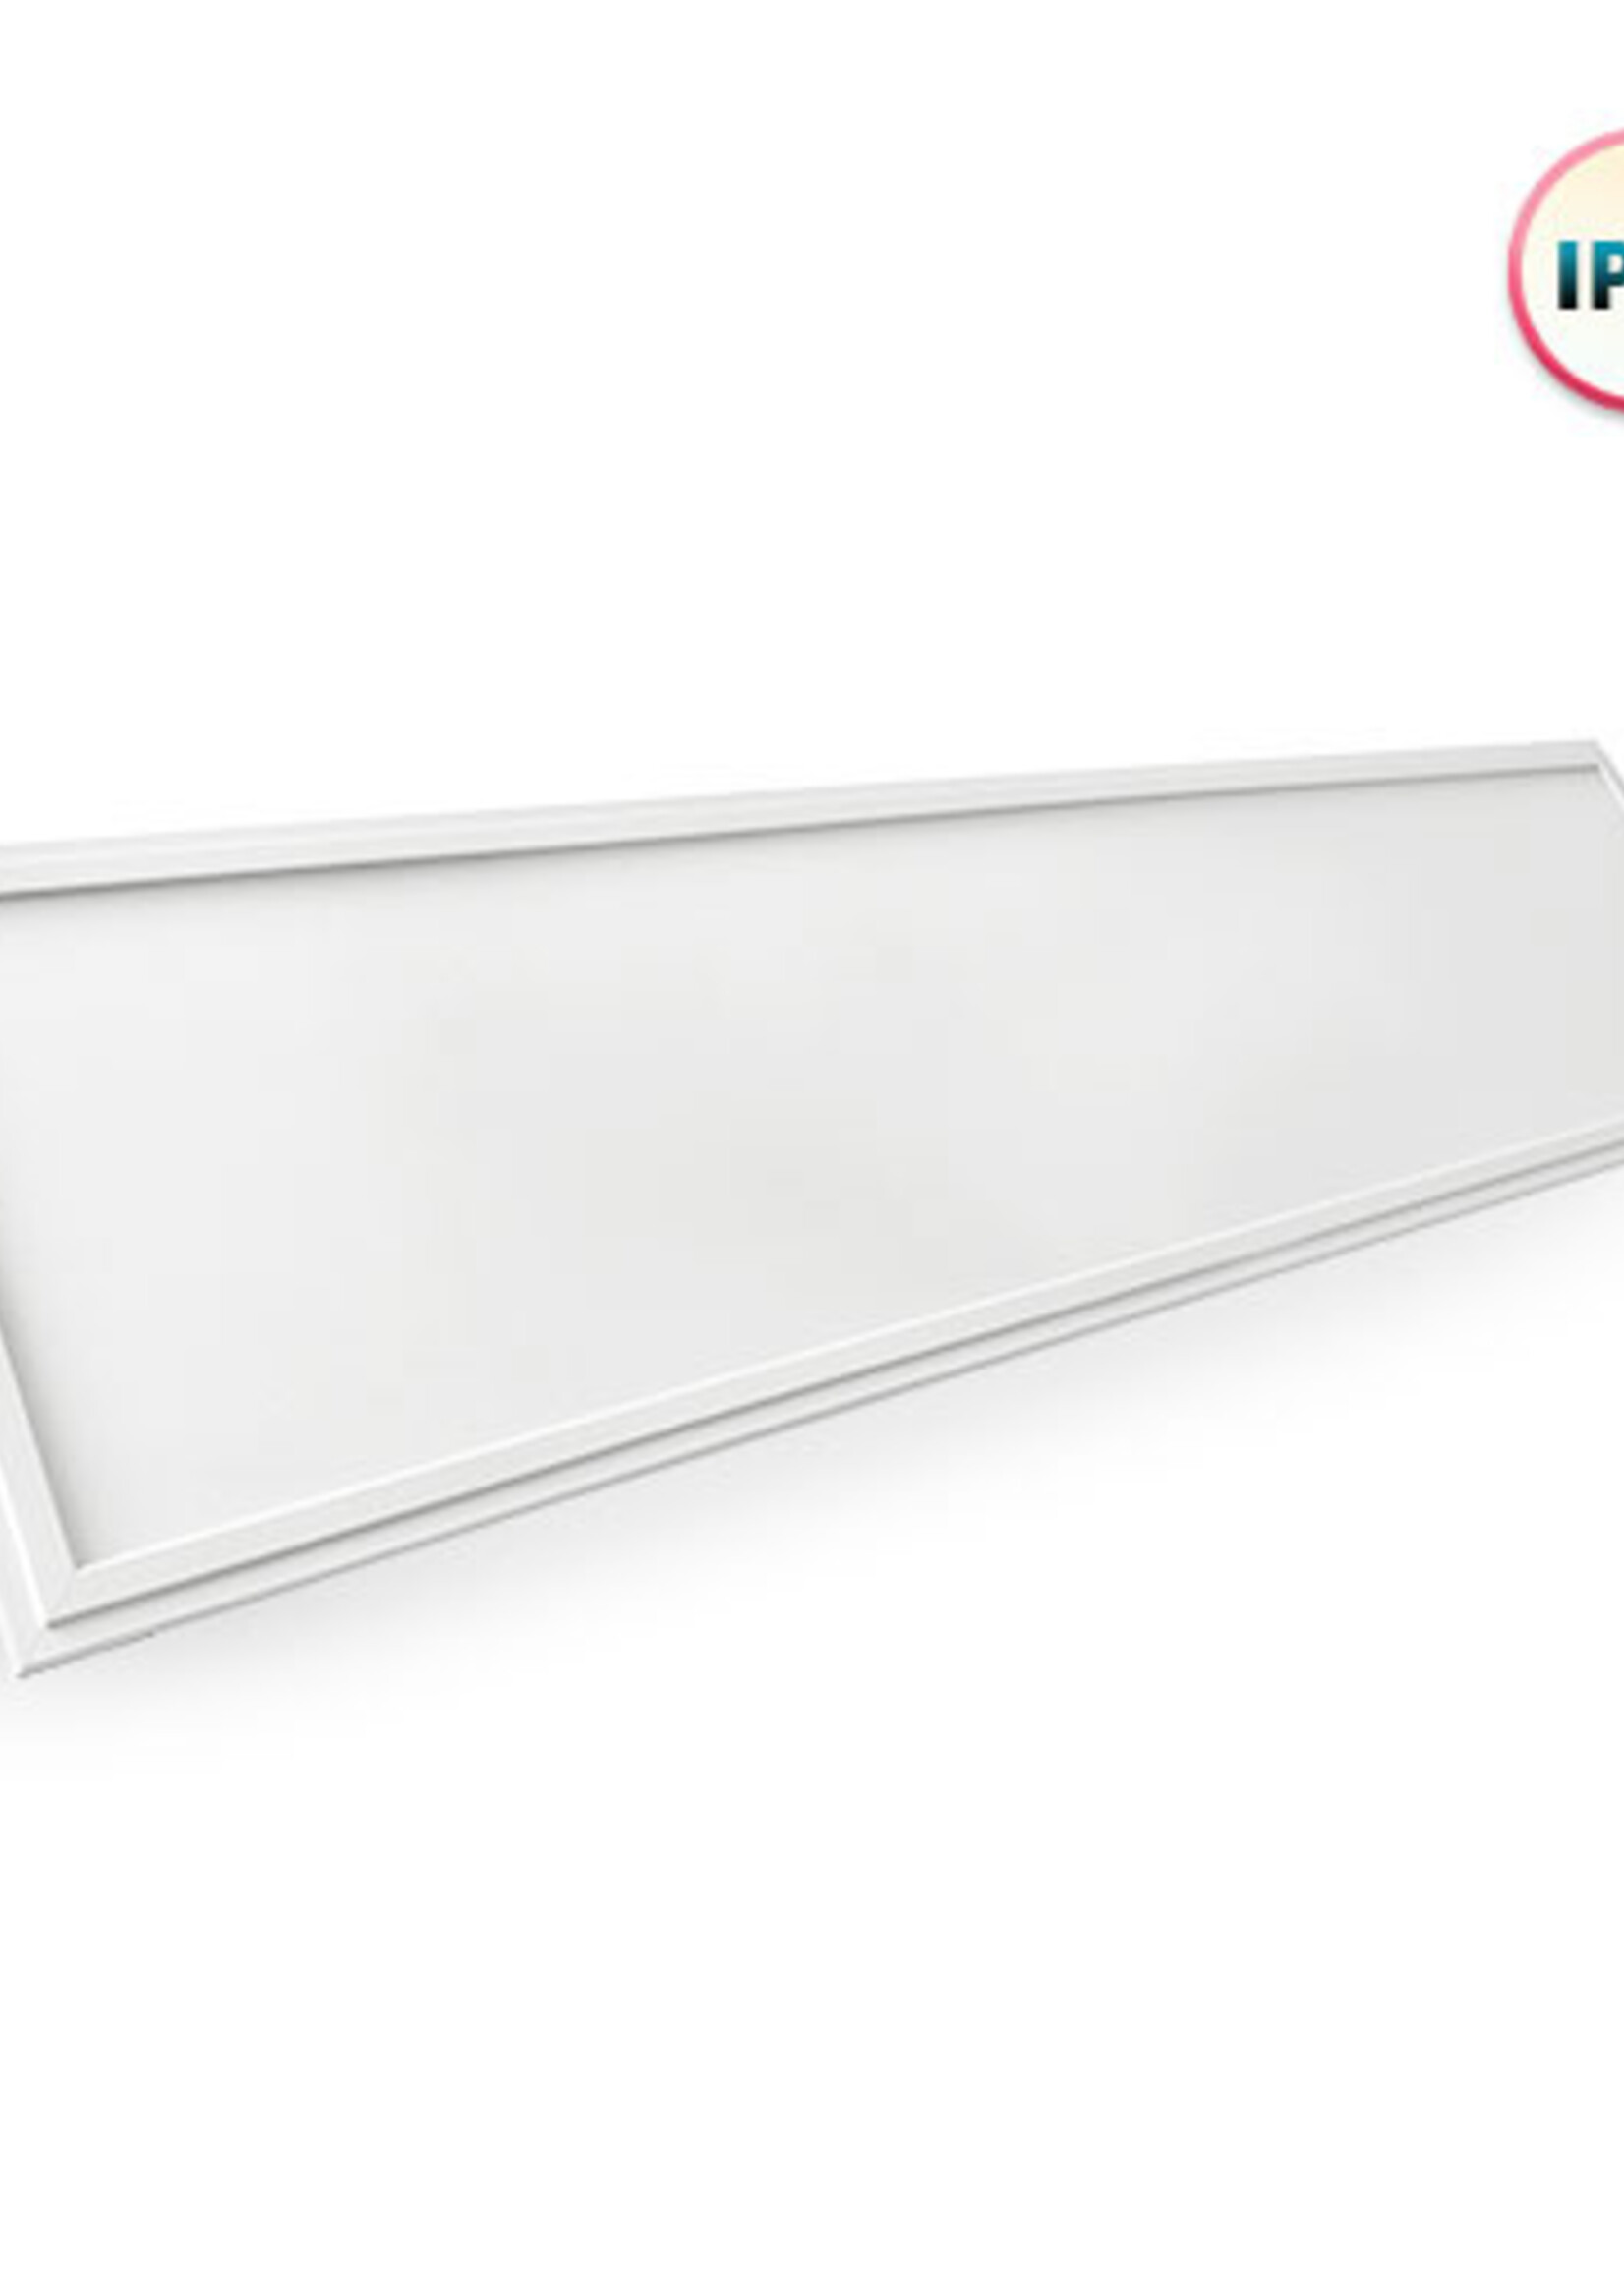 LEDWINKEL-Online LED Panel IP65 Water resistant 30x120cm 4000K 40W 120lm/W High lumen